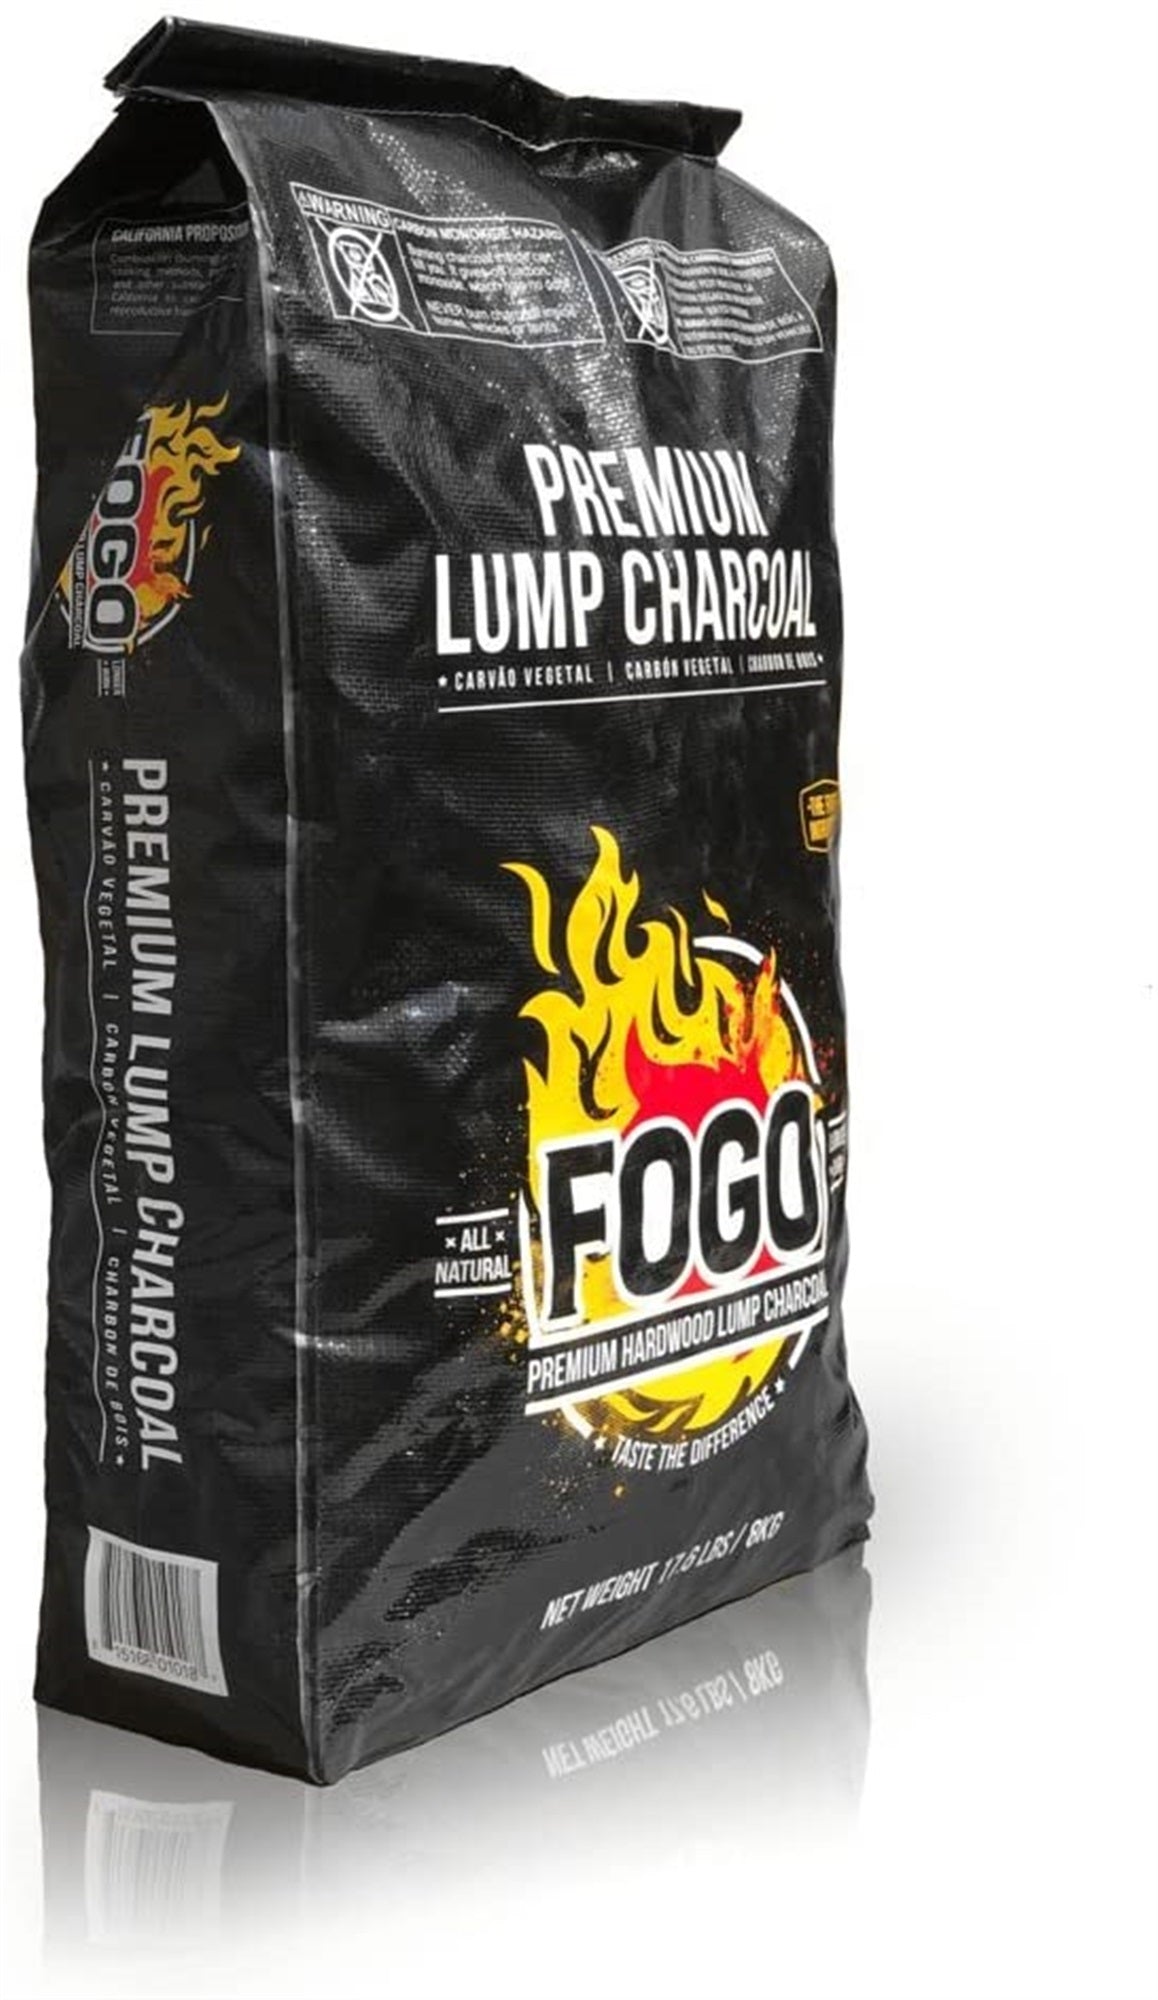 Fogo Premium Hardwood Lump Charcoal Black Bag, 17.6 Pounds